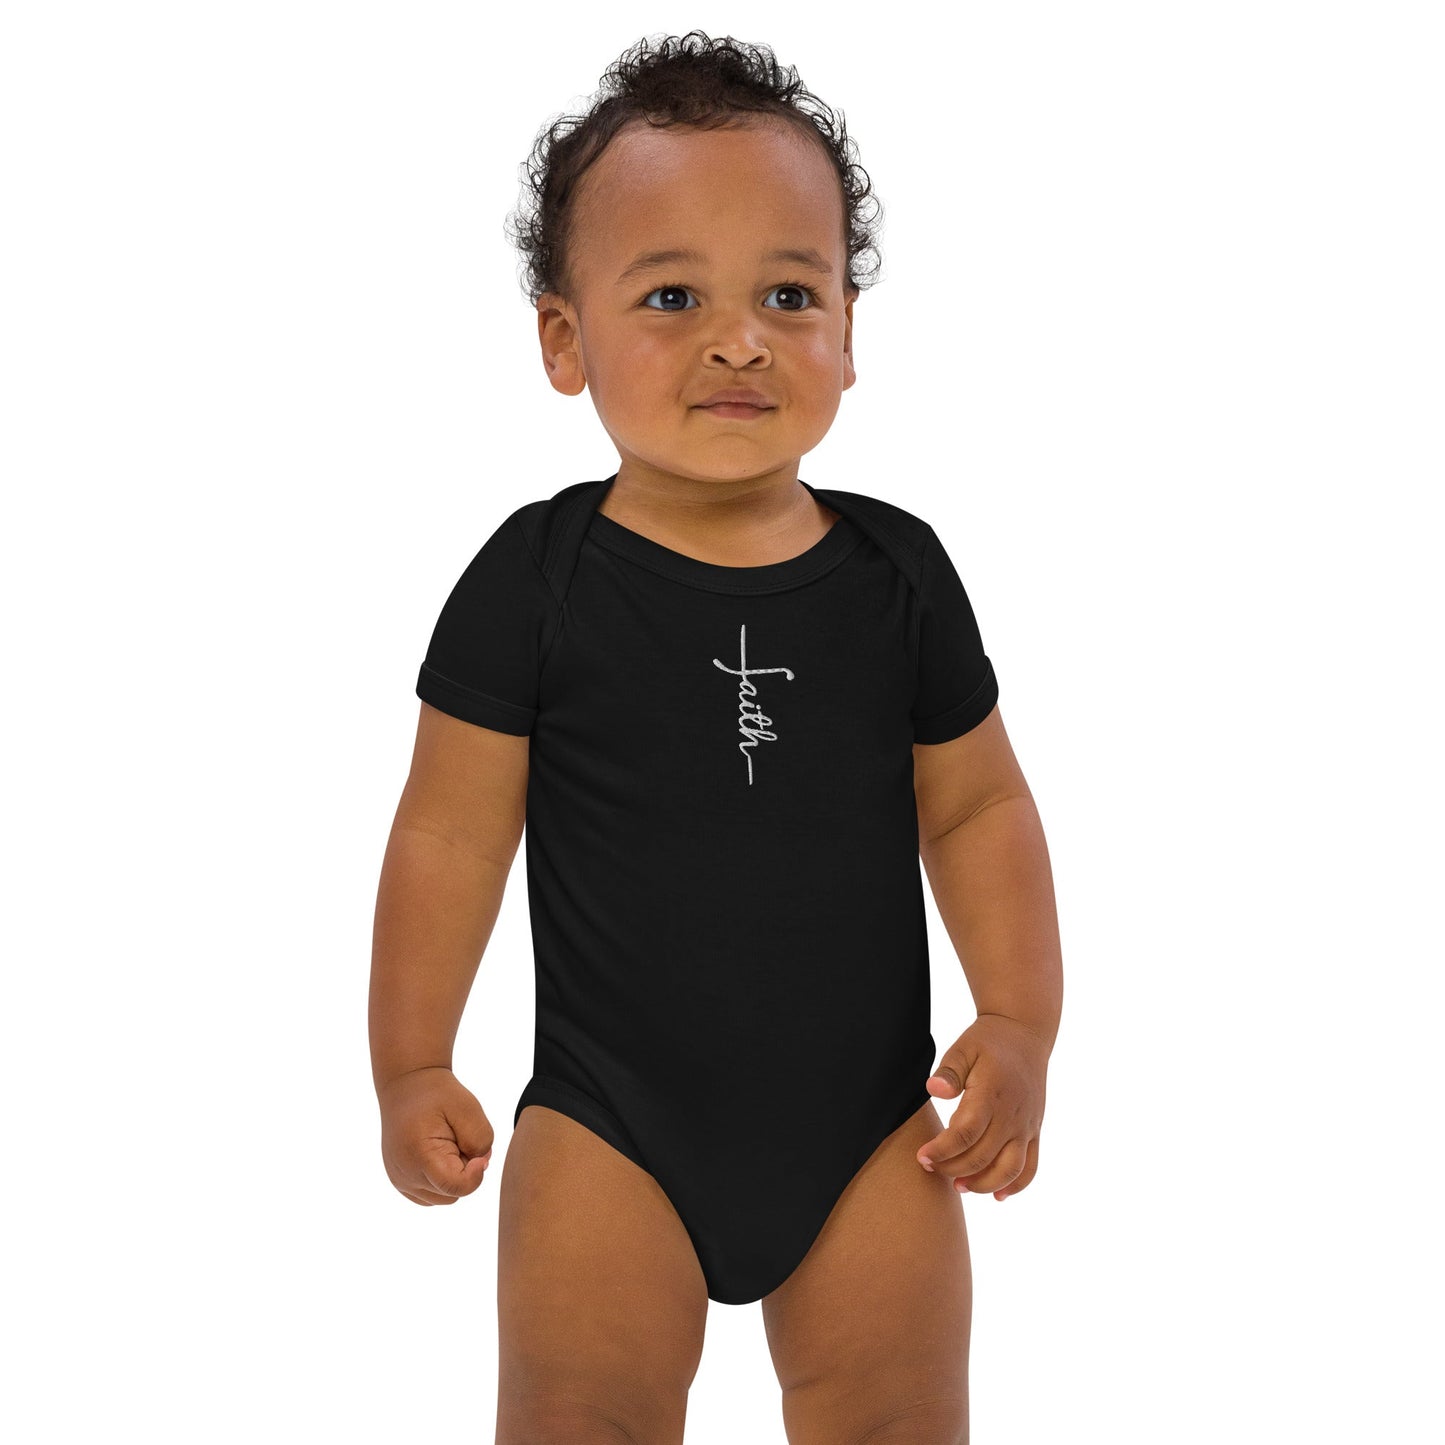 Organic Cotton Baby Bodysuit with Embroidered "Faith" Cross - faithbook